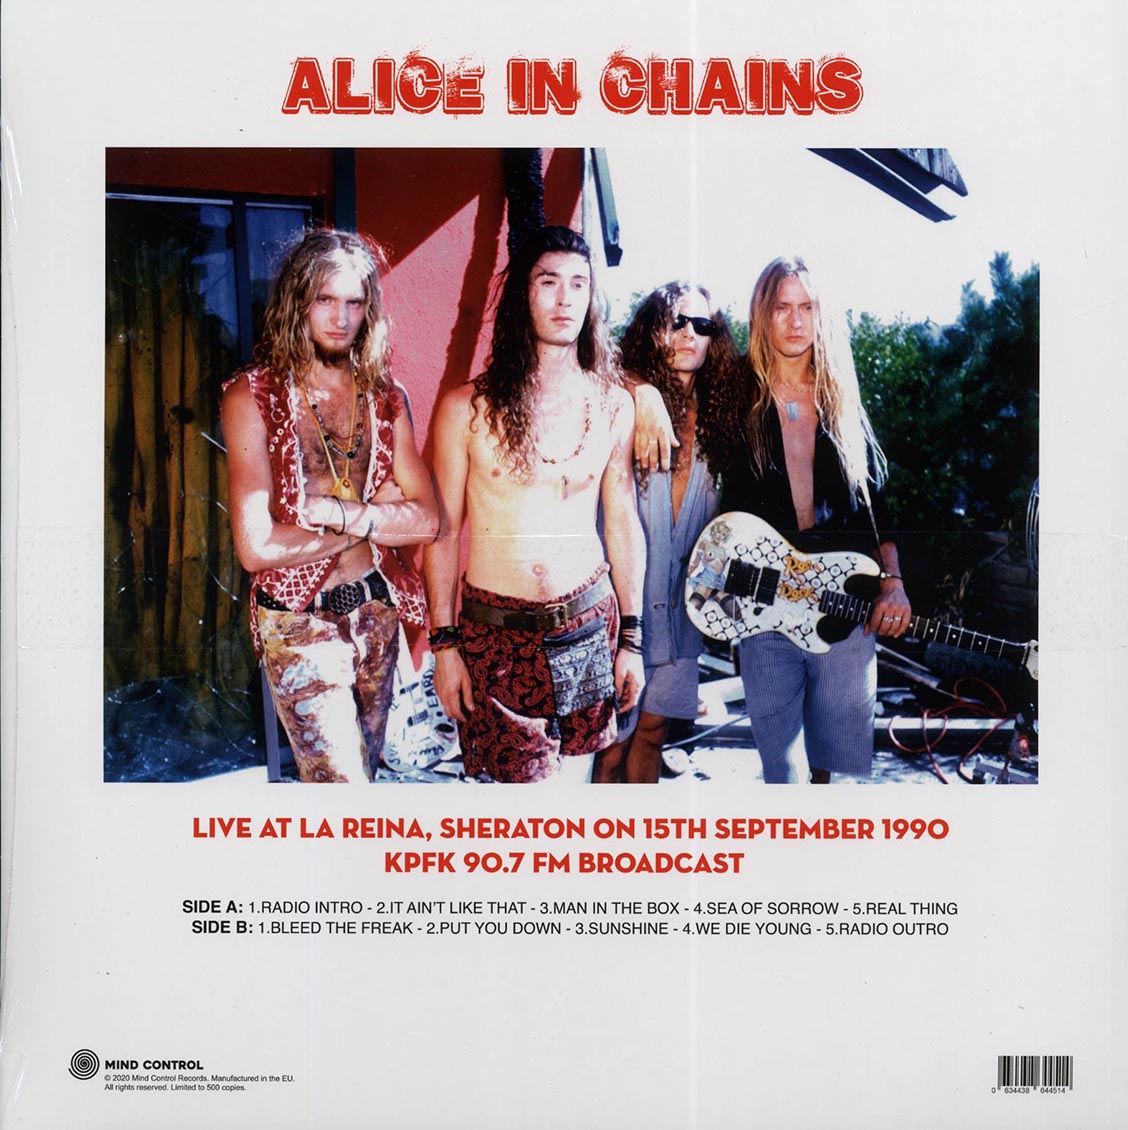 Alice In Chains - Live At La Reina, Sheraton, 15th September 1990 KPFK 90.7 Radio Broadcast (ltd. 500 copies made) - Vinyl LP, LP